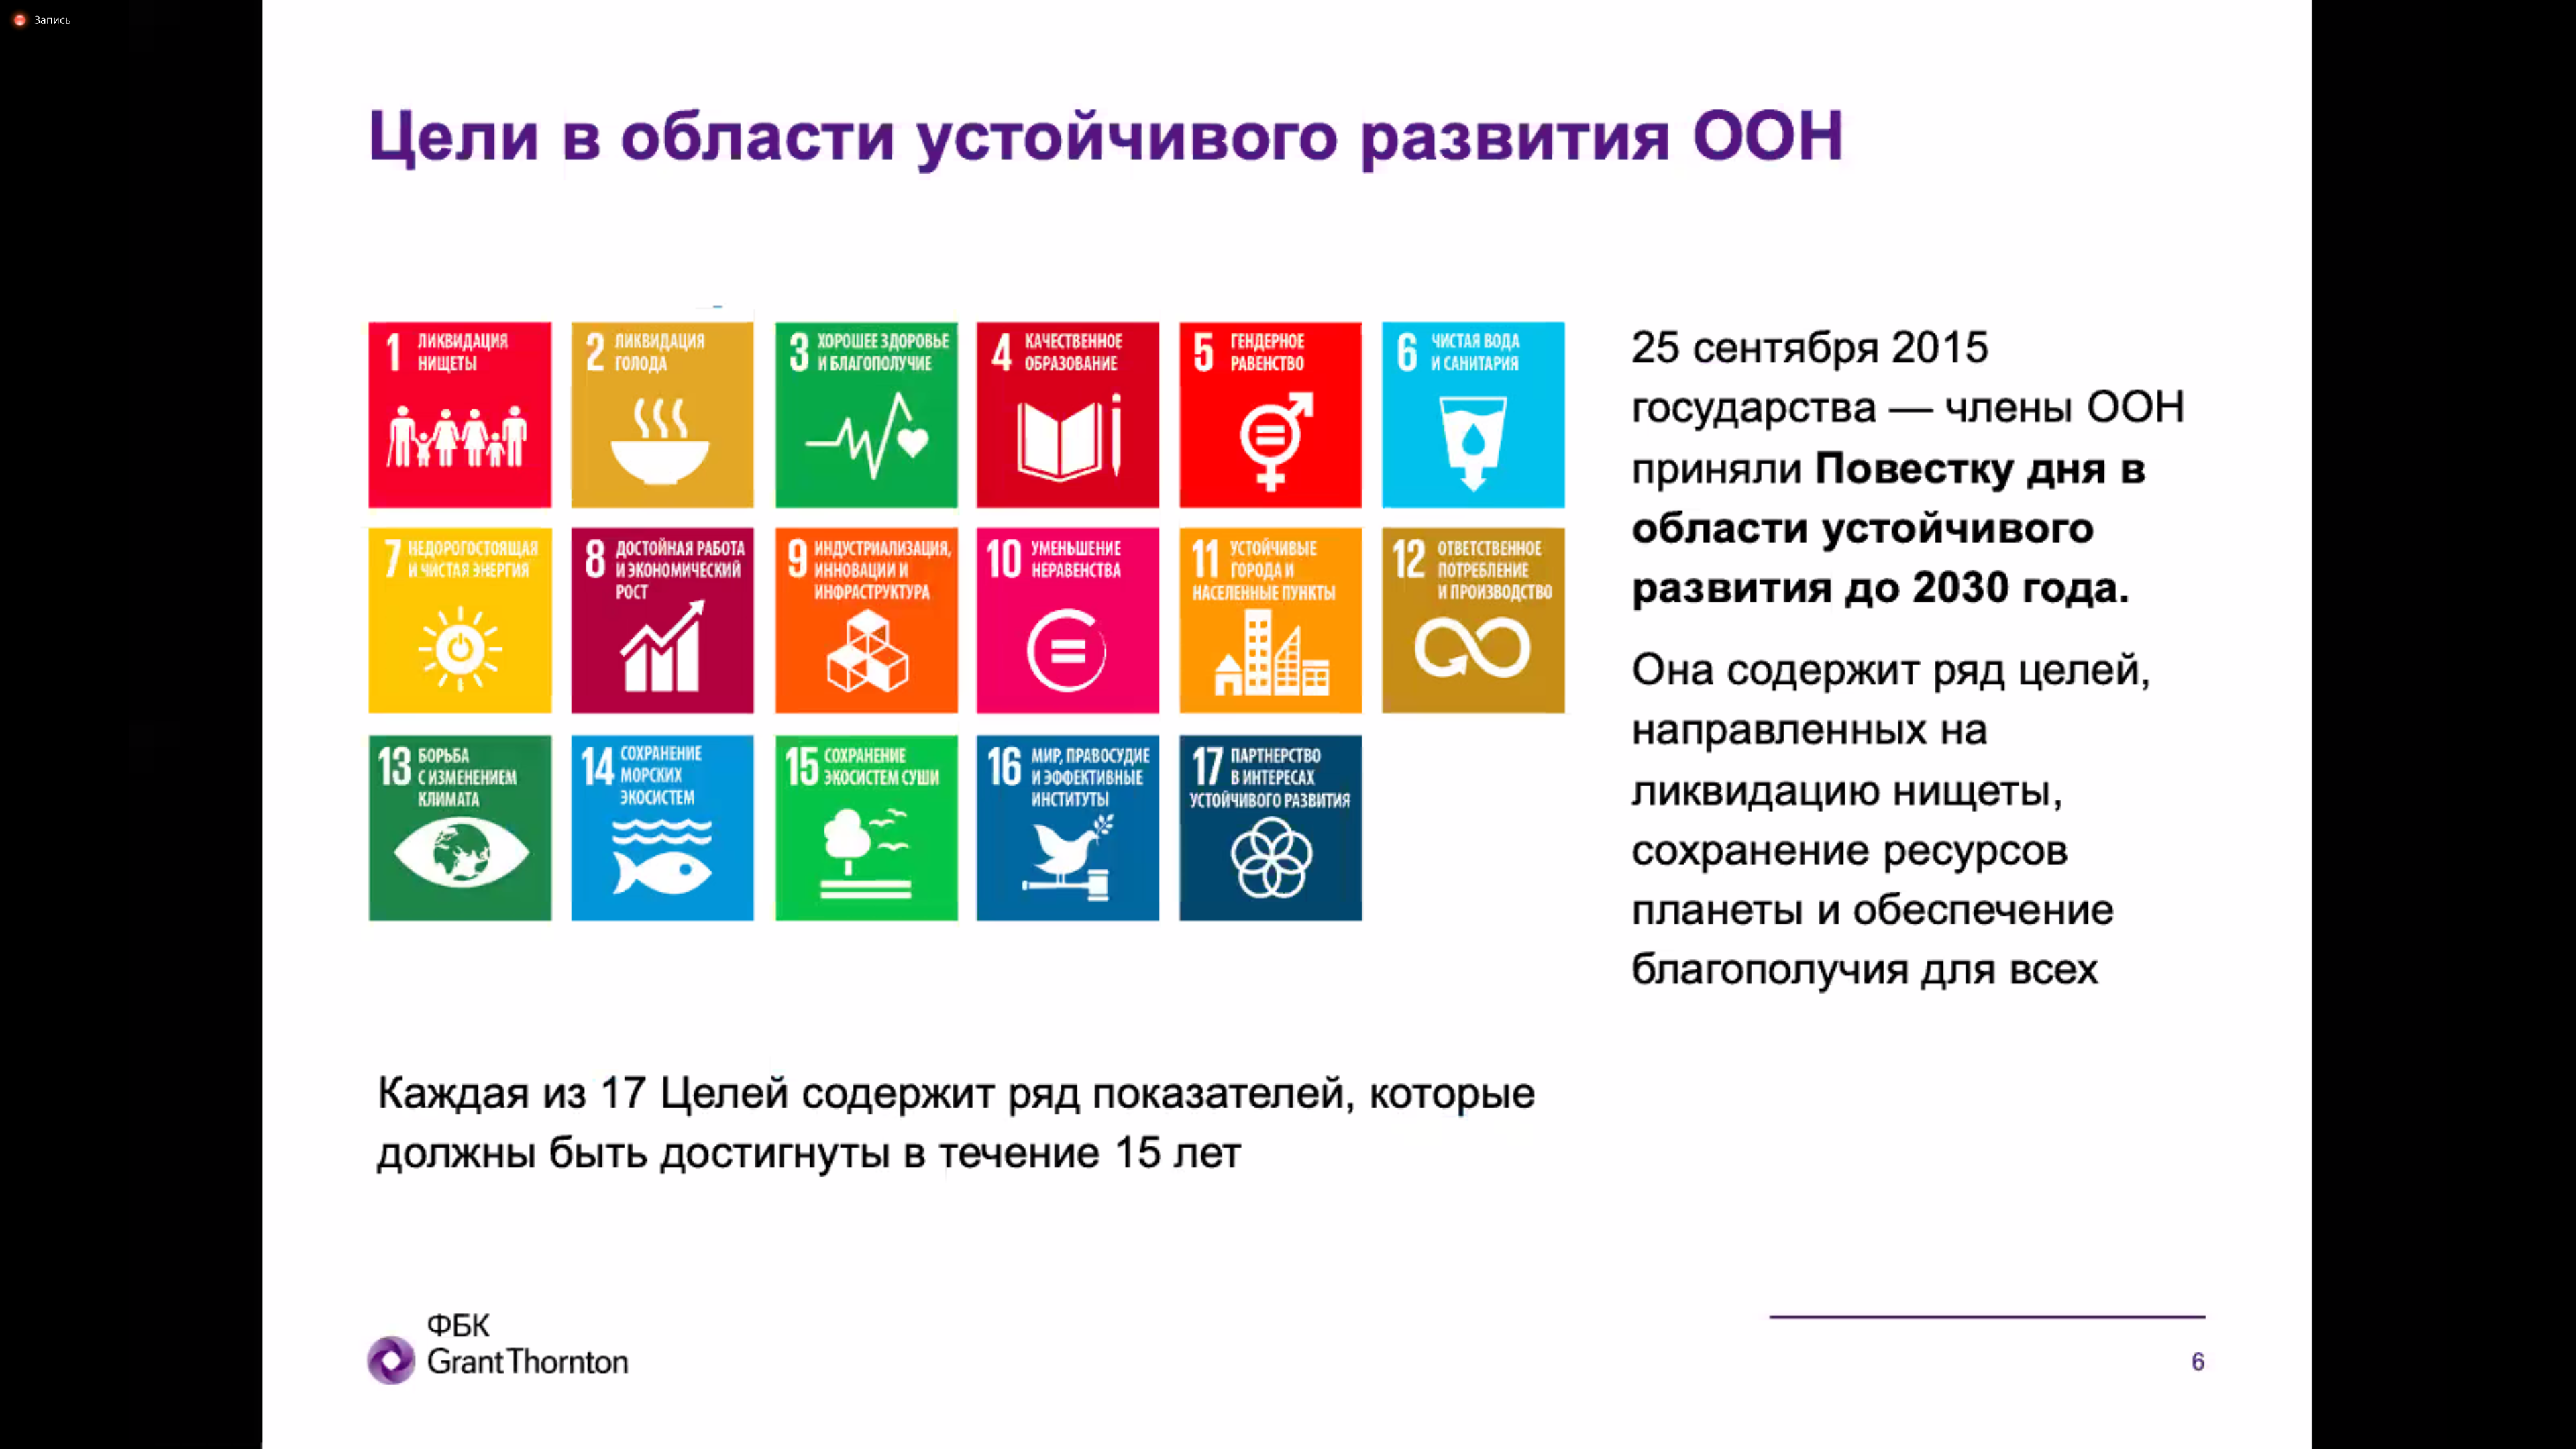 Цели оон 2015. Цели устойчивого развития ООН 2015-2030. Цели устойчивого развития ООН. ООН цели устойчивого развития до 2030 года. 17 Целей устойчивого развития ООН.